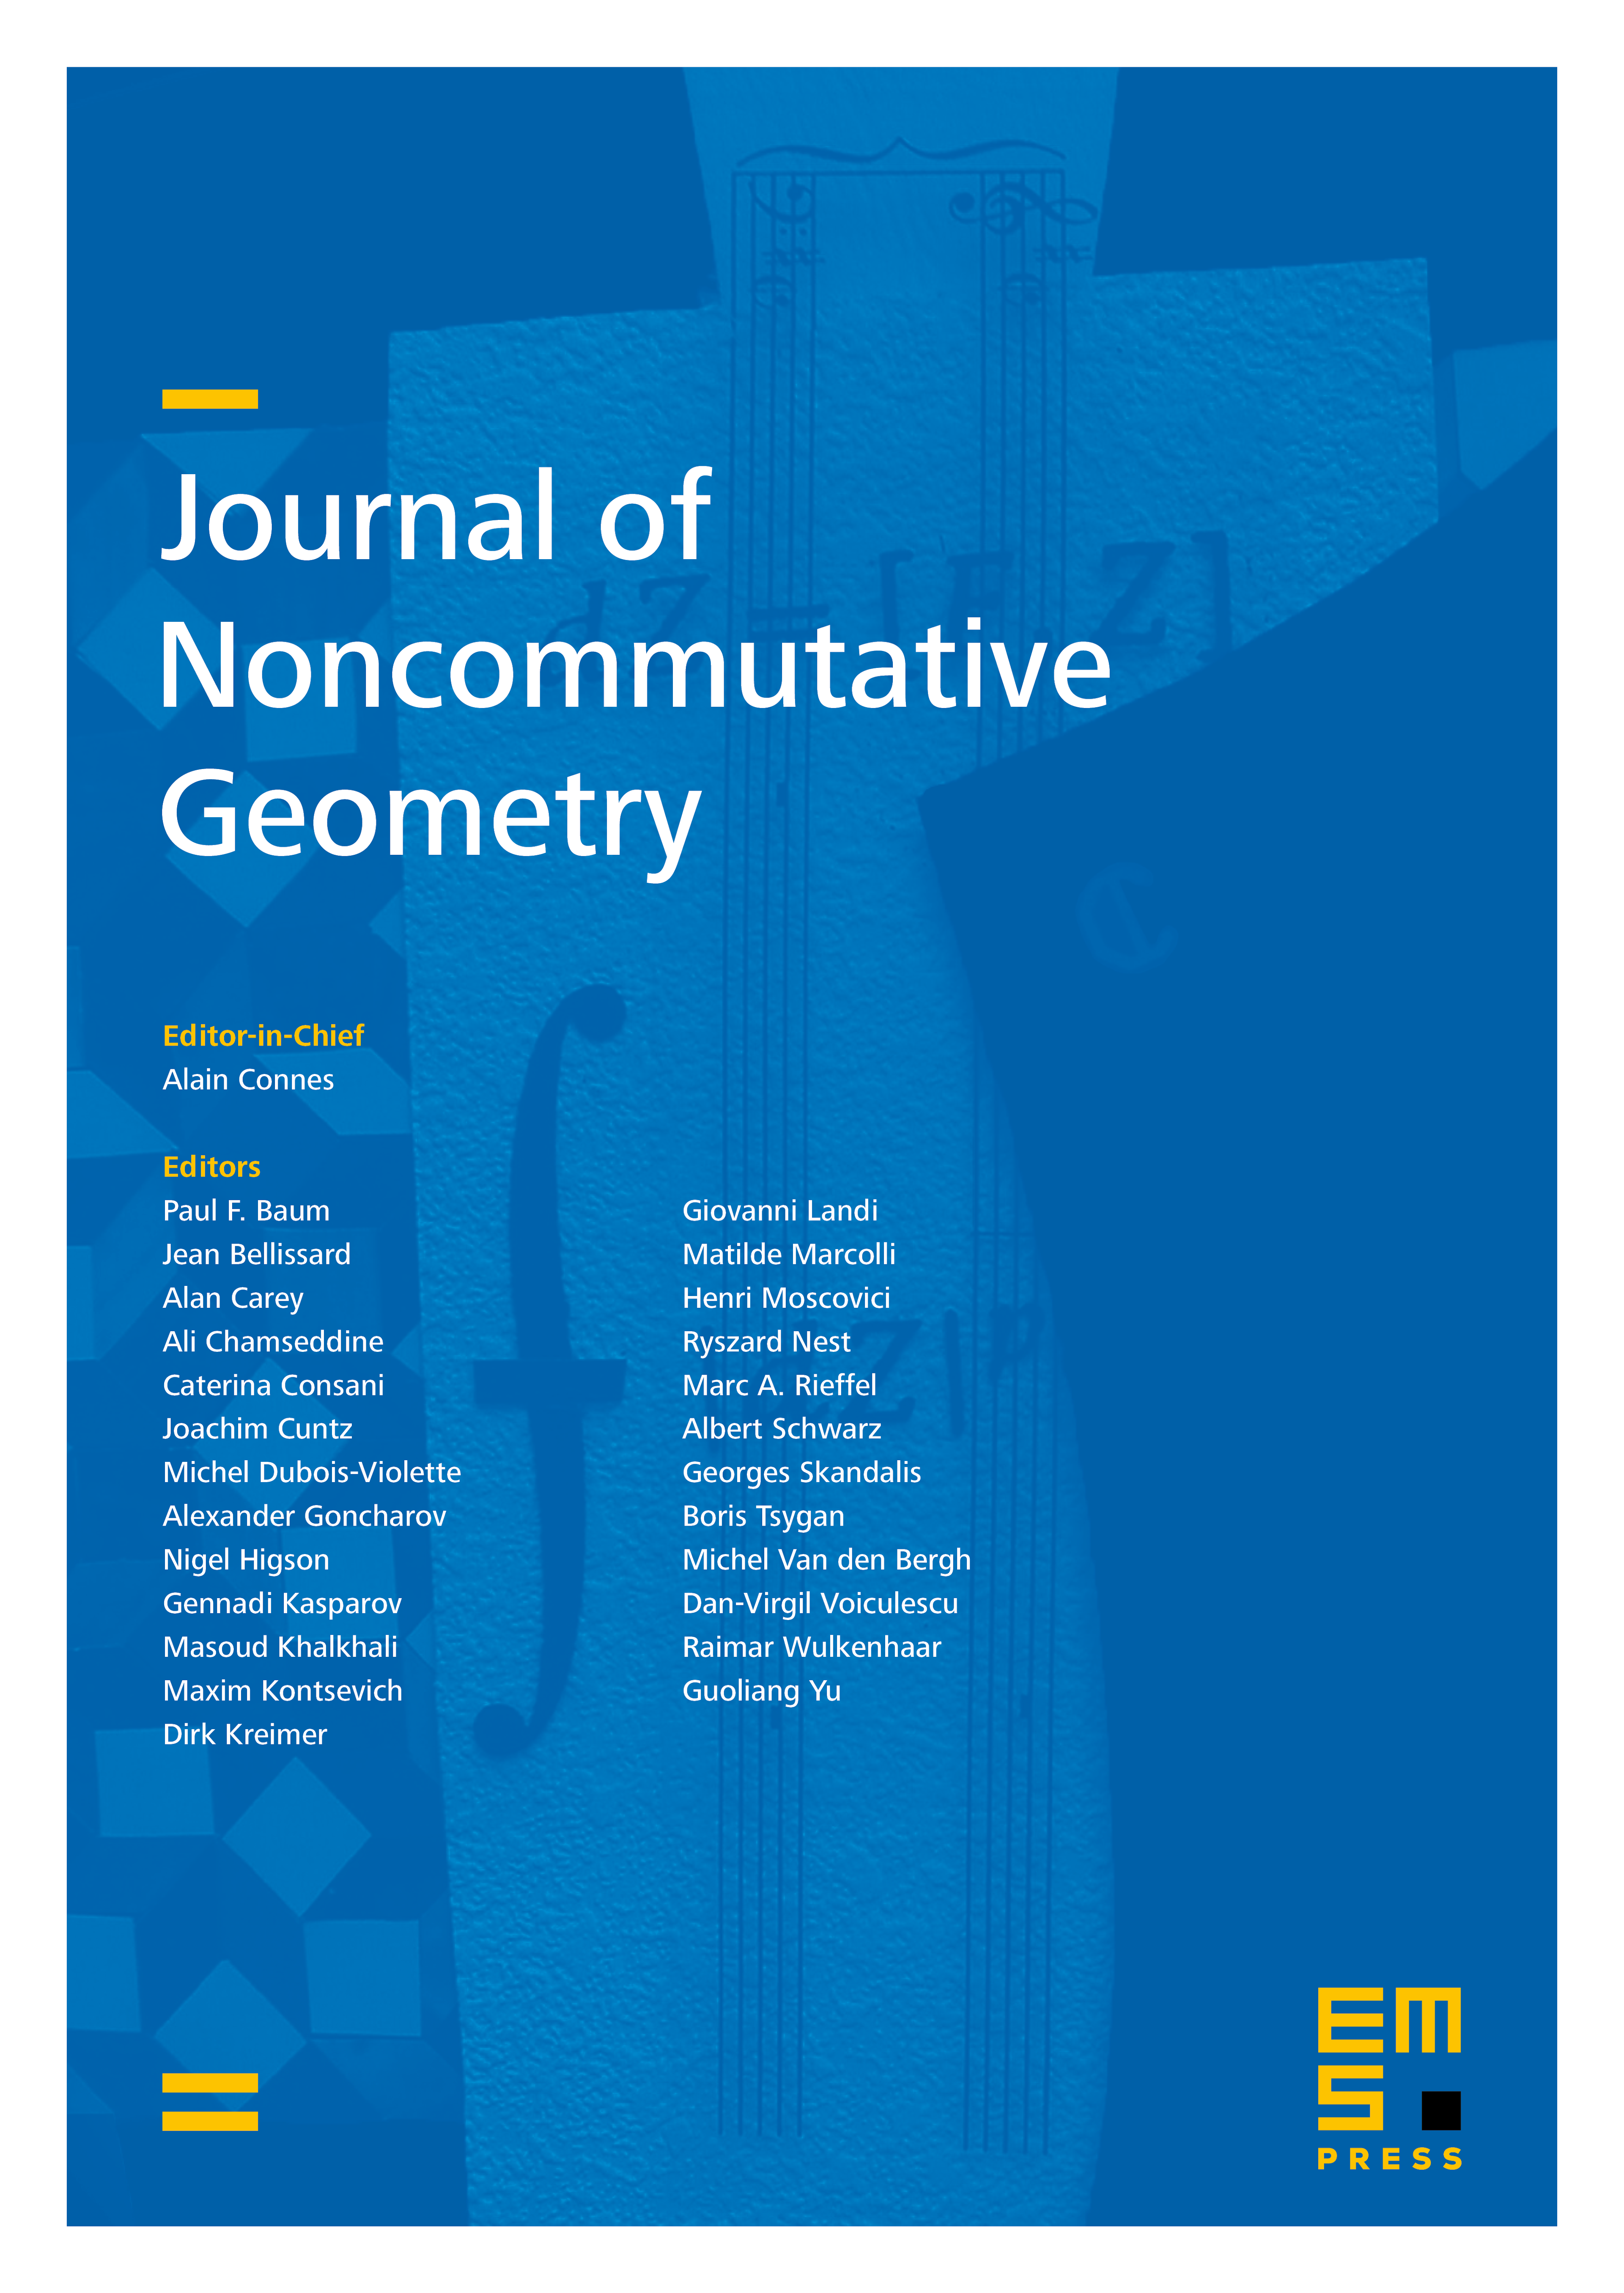 Tate-Hochschild homology and cohomology of Frobenius algebras cover